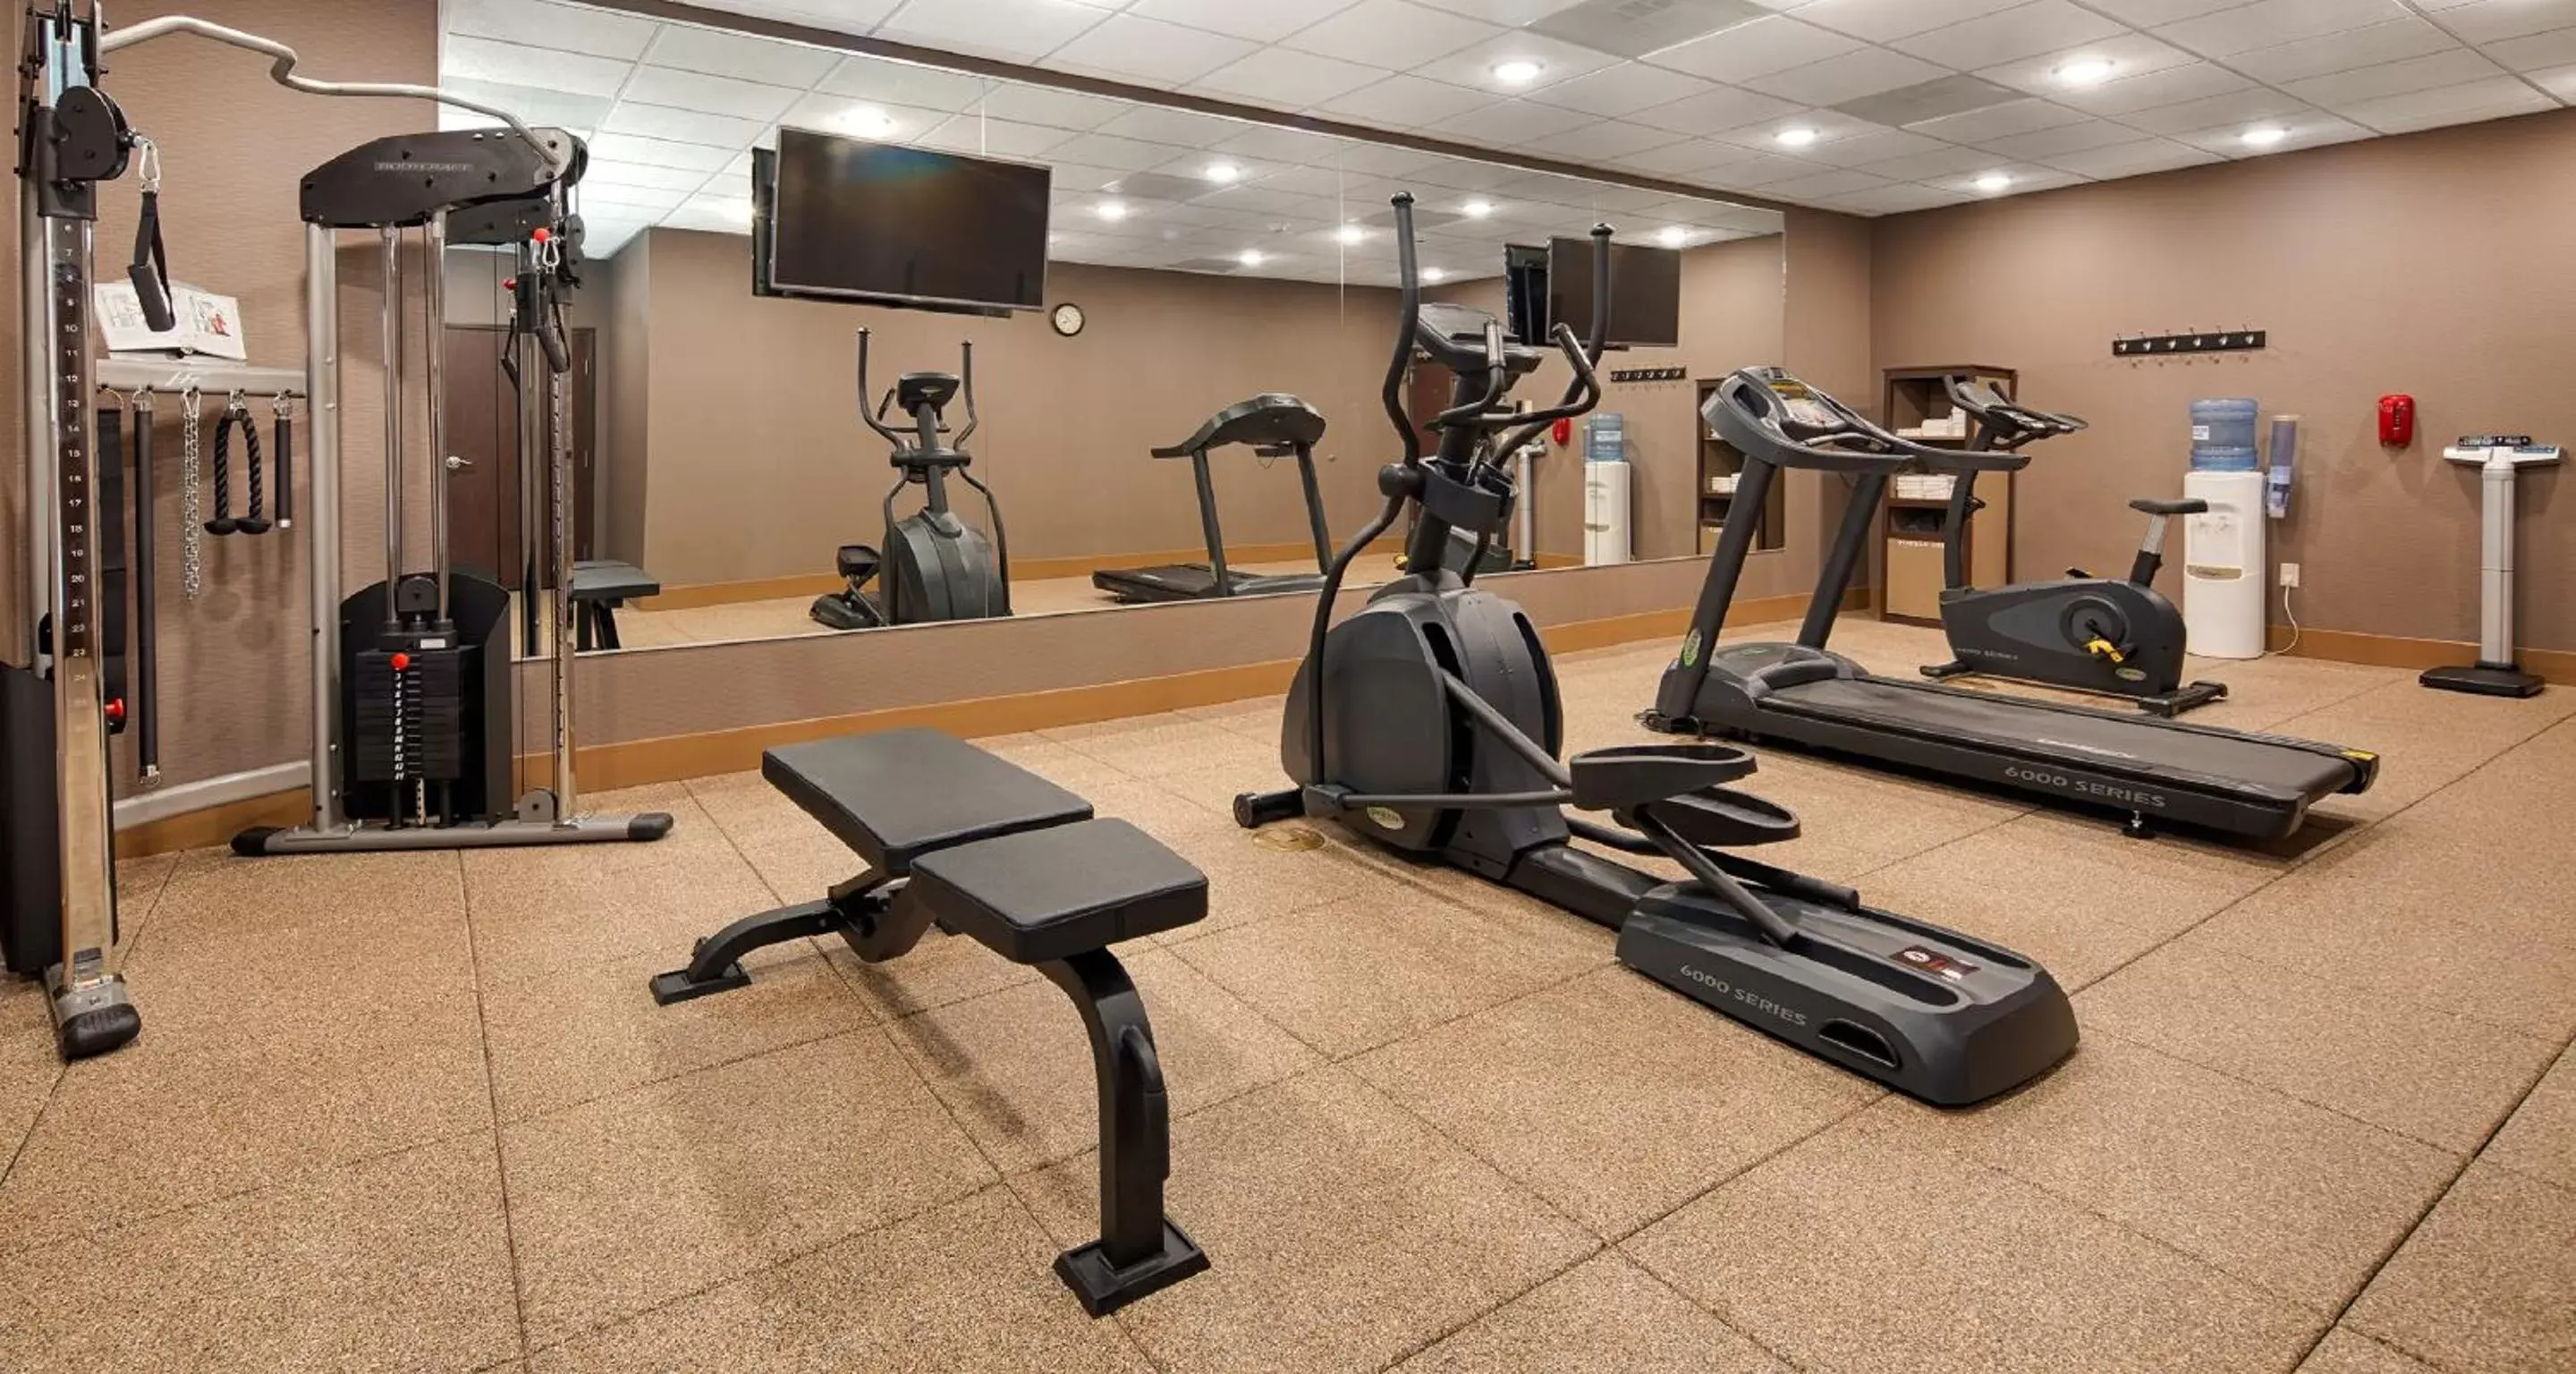 Fitness centre/facilities, Fitness Center/Facilities in Best Western PLUS Casper Inn & Suites